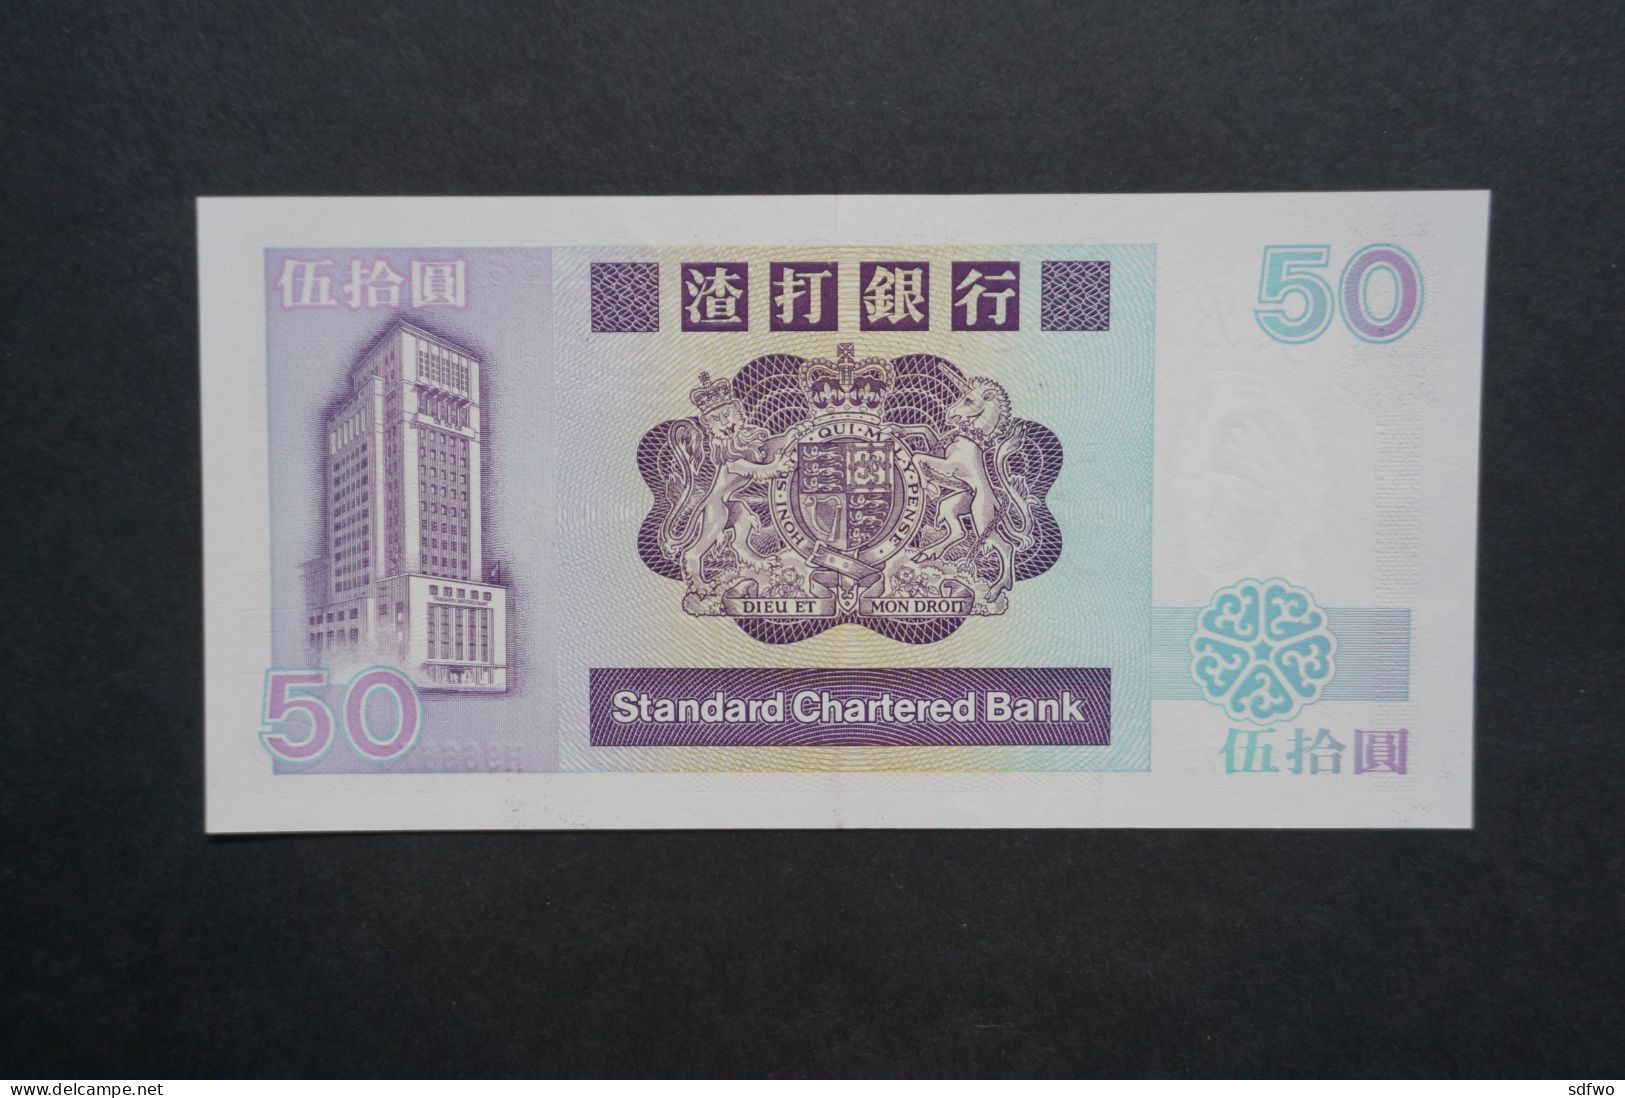 (Tv) 1992 Hong Kong Issue - Standard Chartered Bank 50 DOLLARS ($50)  #H966675